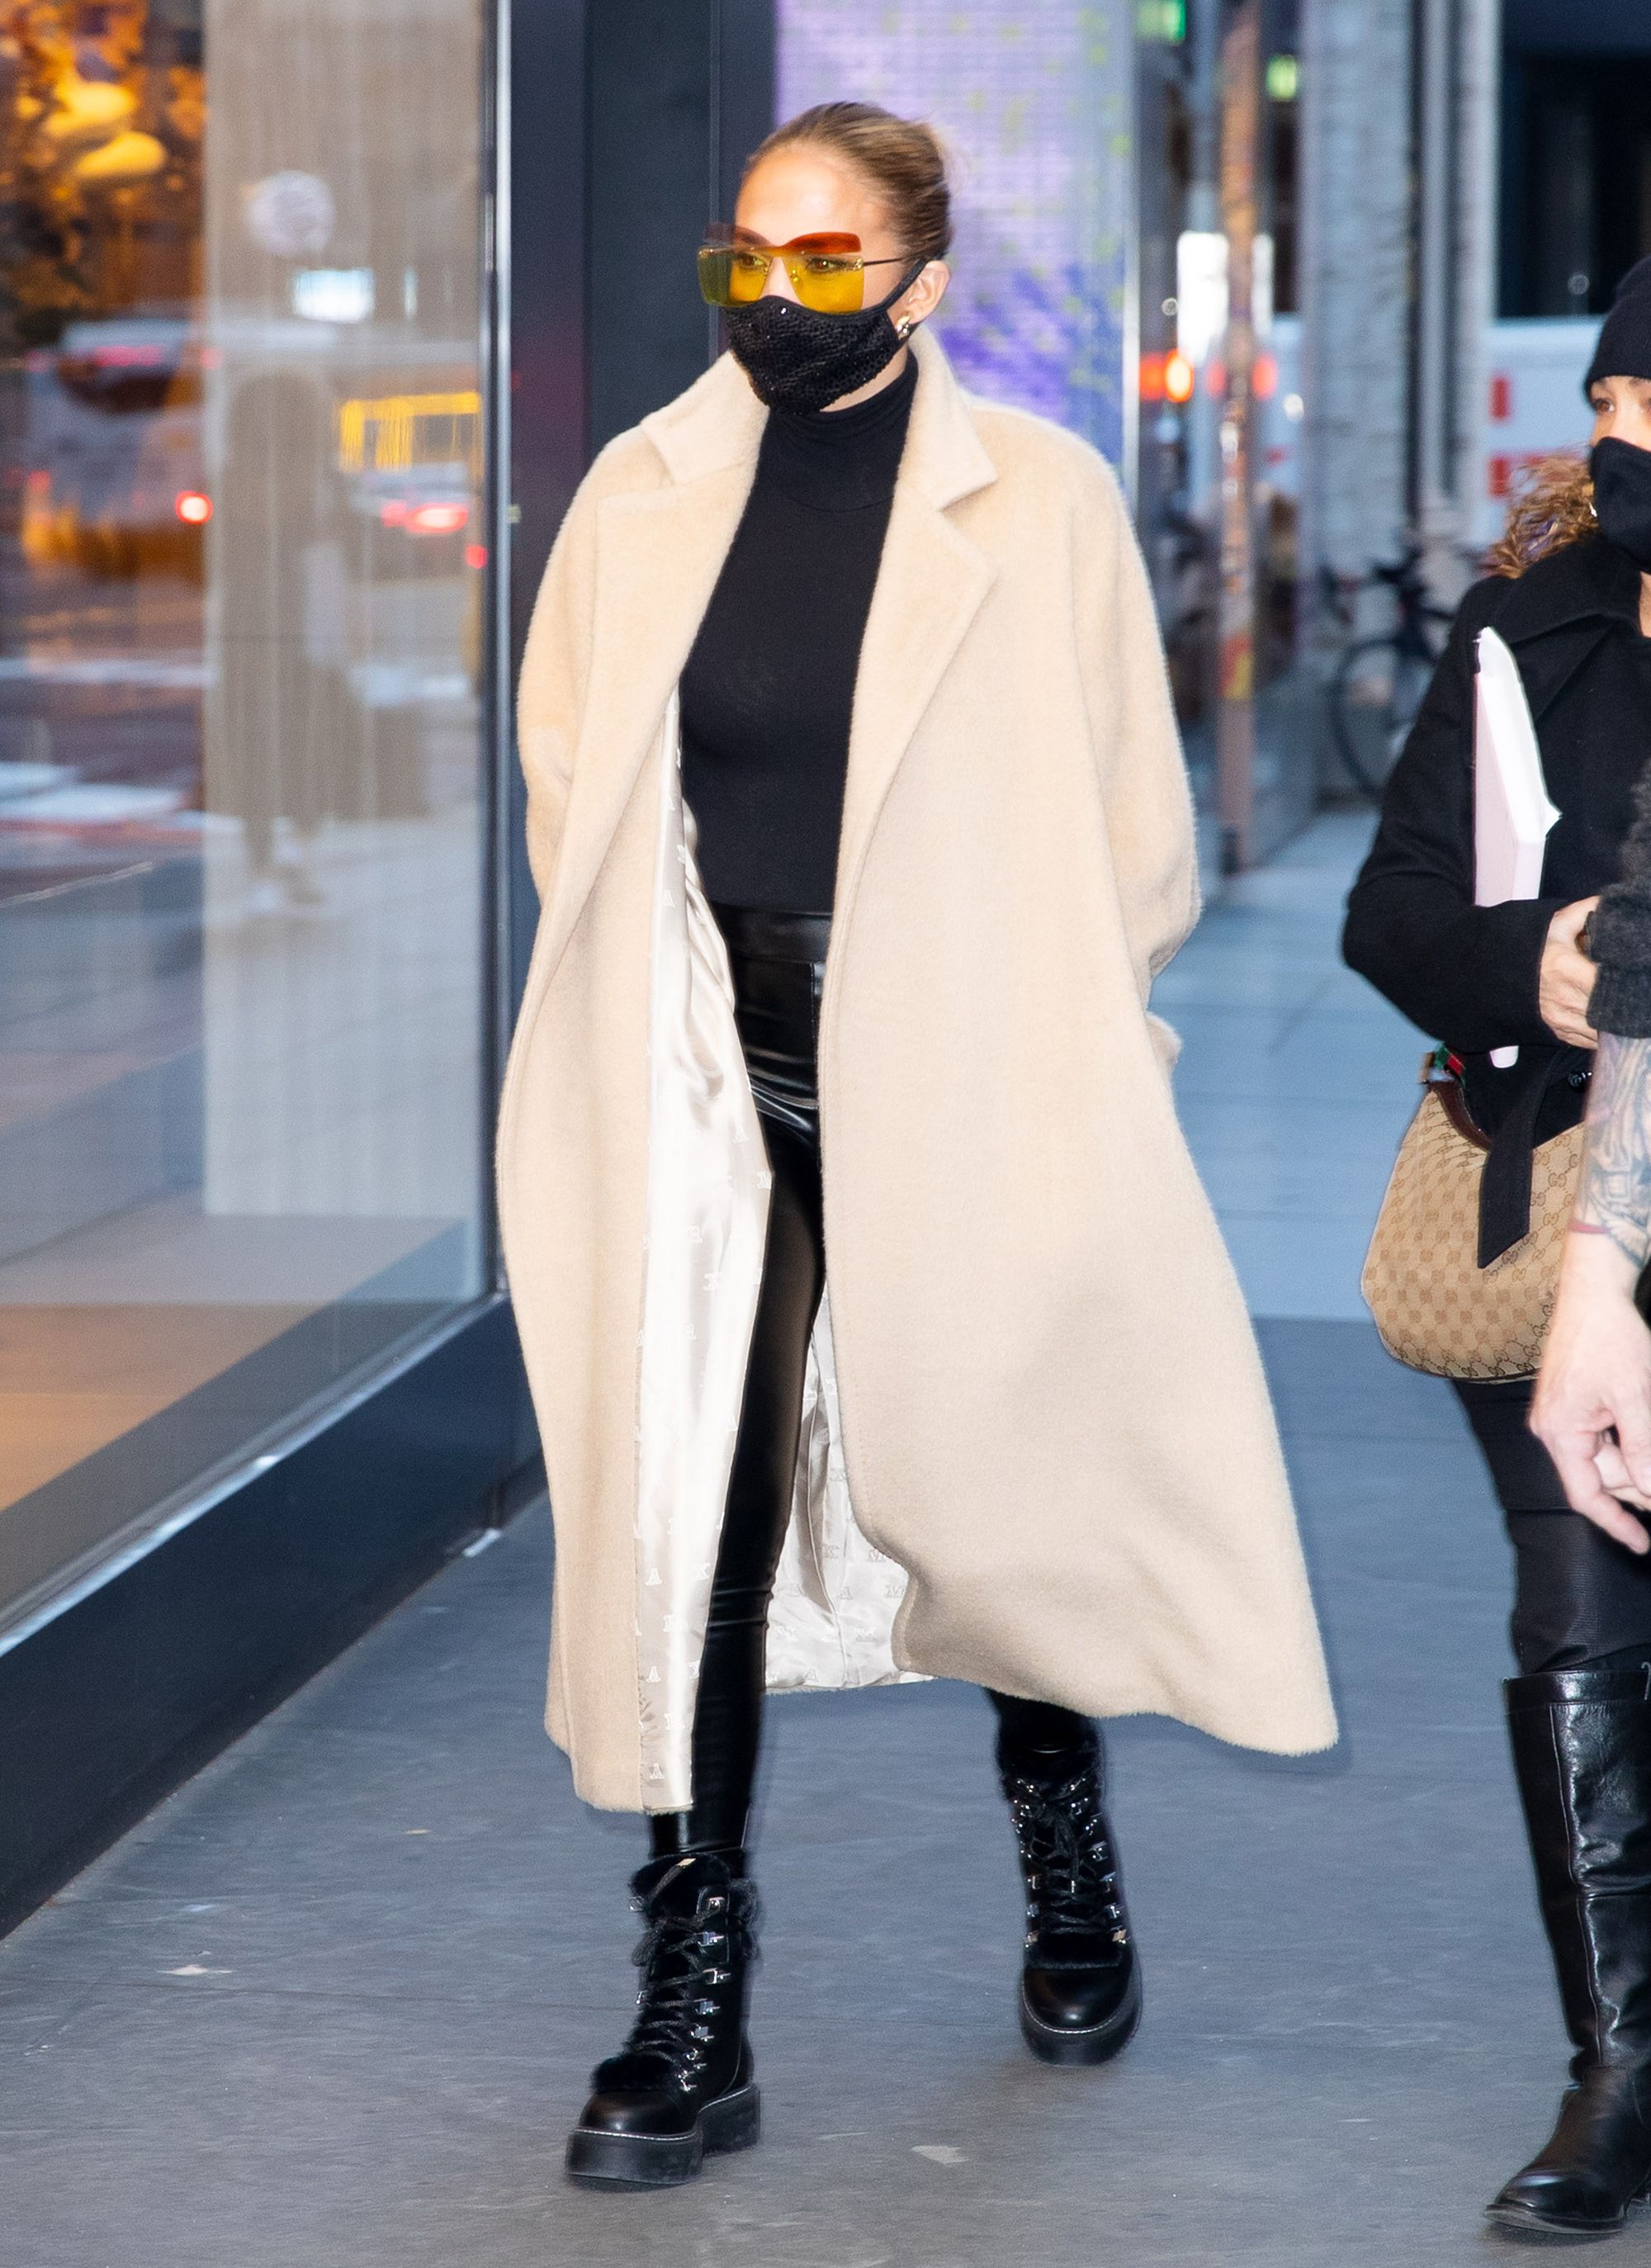 estera pulgada colina Jennifer Lopez: botas militares para bajitas, leggins y abrigo